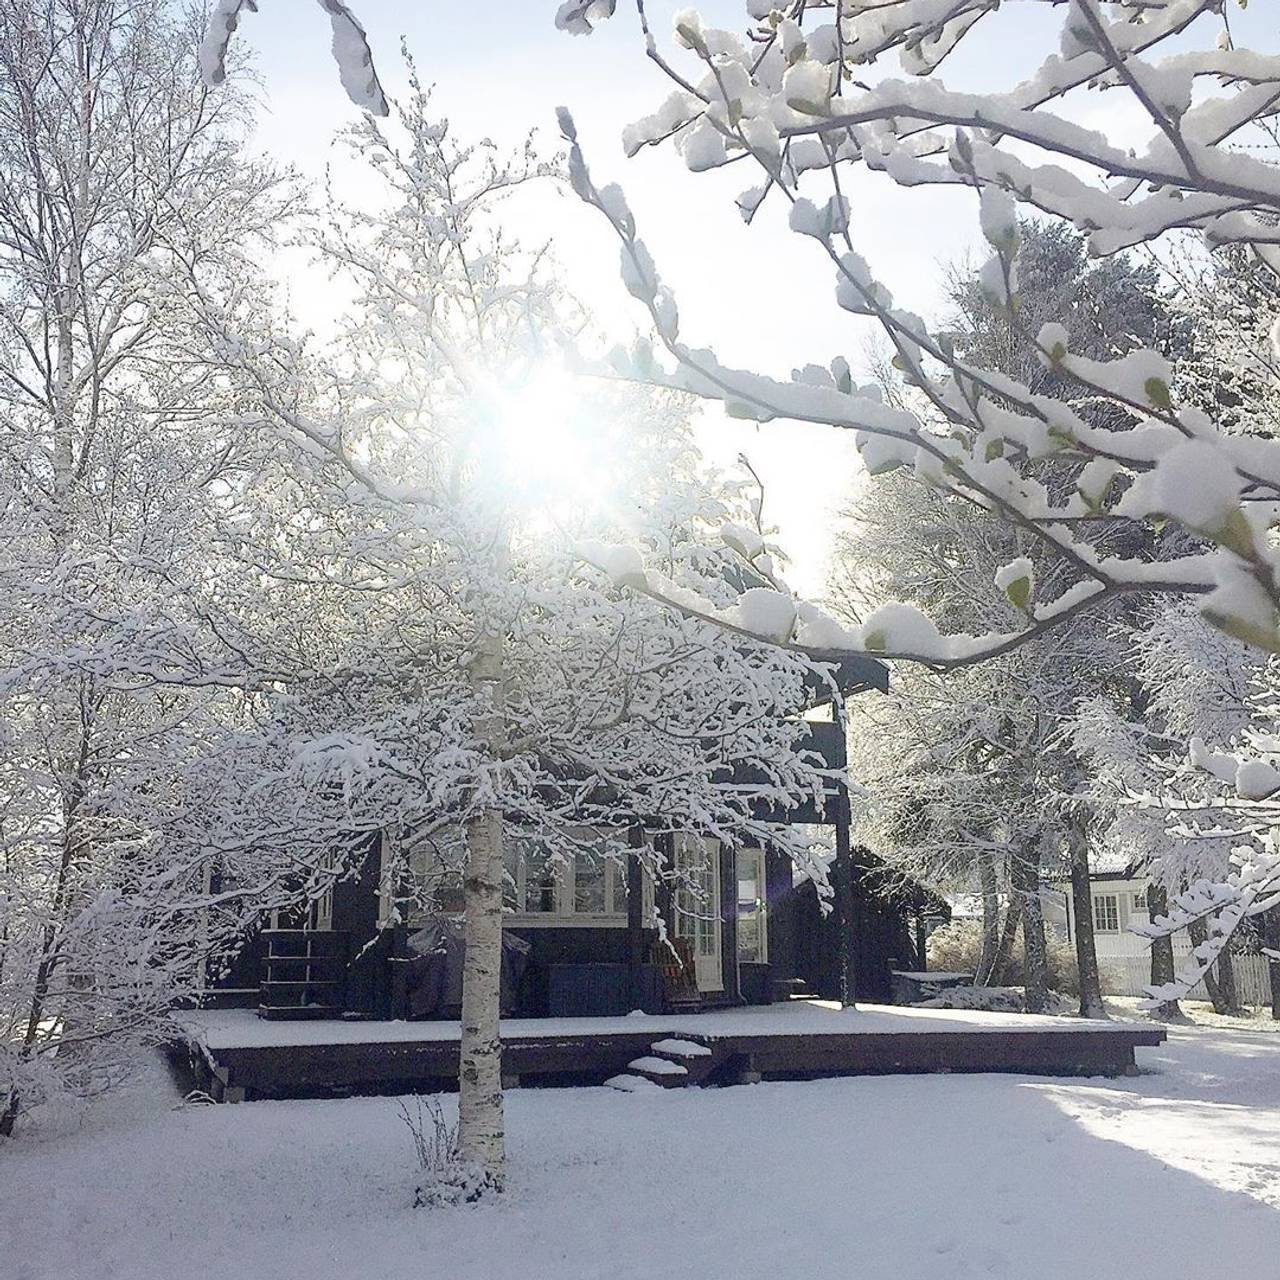 Et hus med trær foran, dekket i snø.